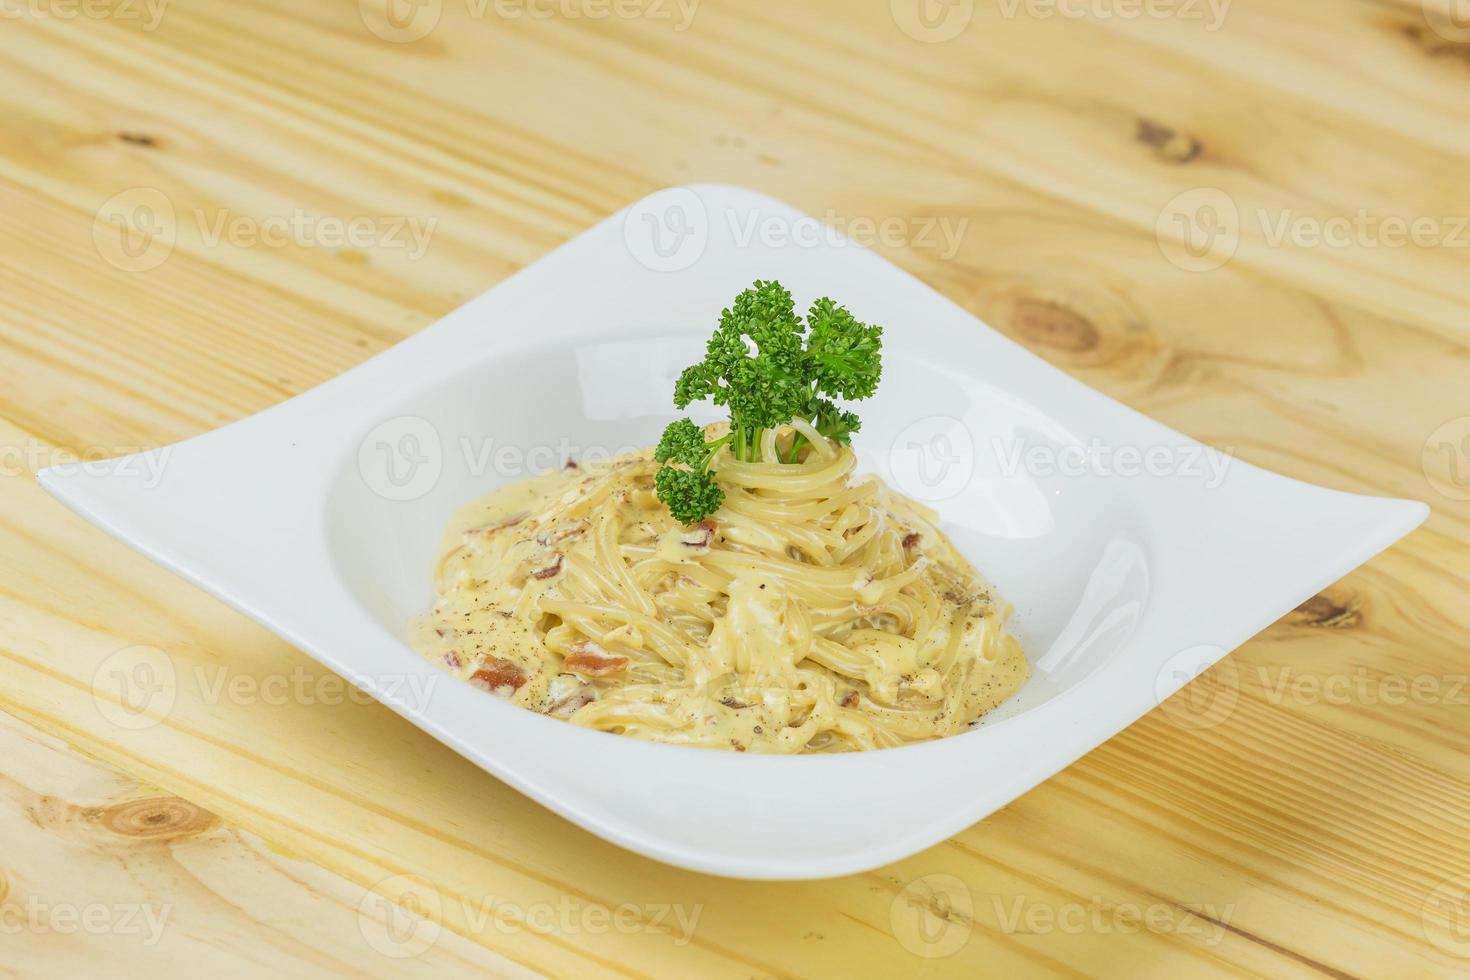 klassieke huisgemaakte carbonara pasta met pancetta, ei, harde Parmezaanse kaas en roomsaus. Italiaanse keuken. spaghetti alla carbonara. foto